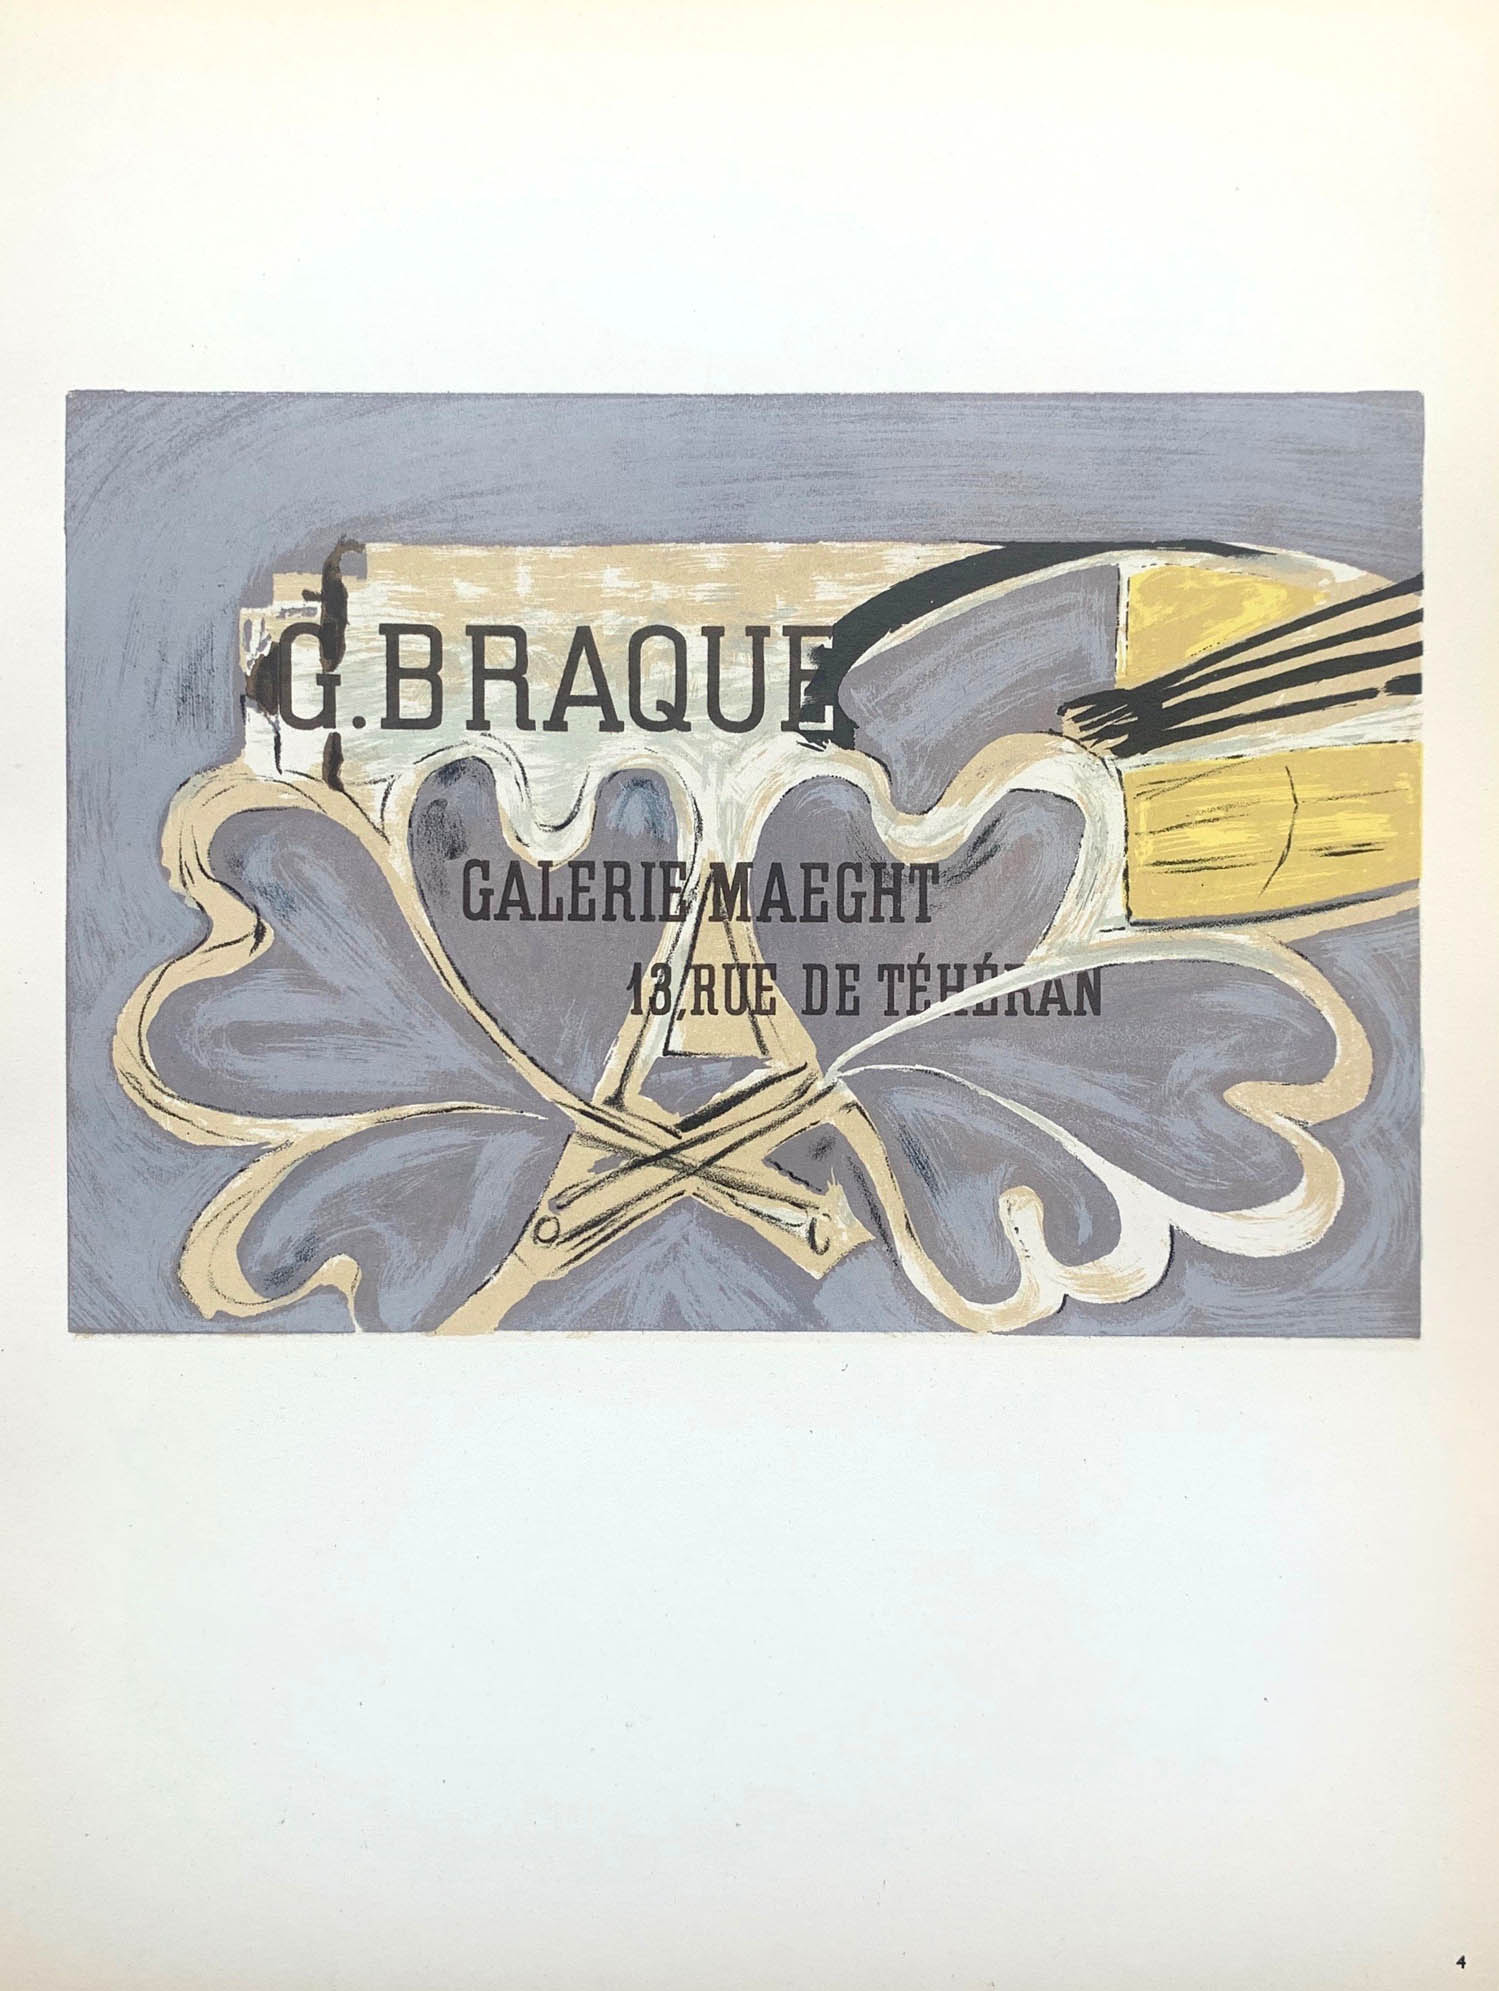 Braque lithograph, Galerie Maeght